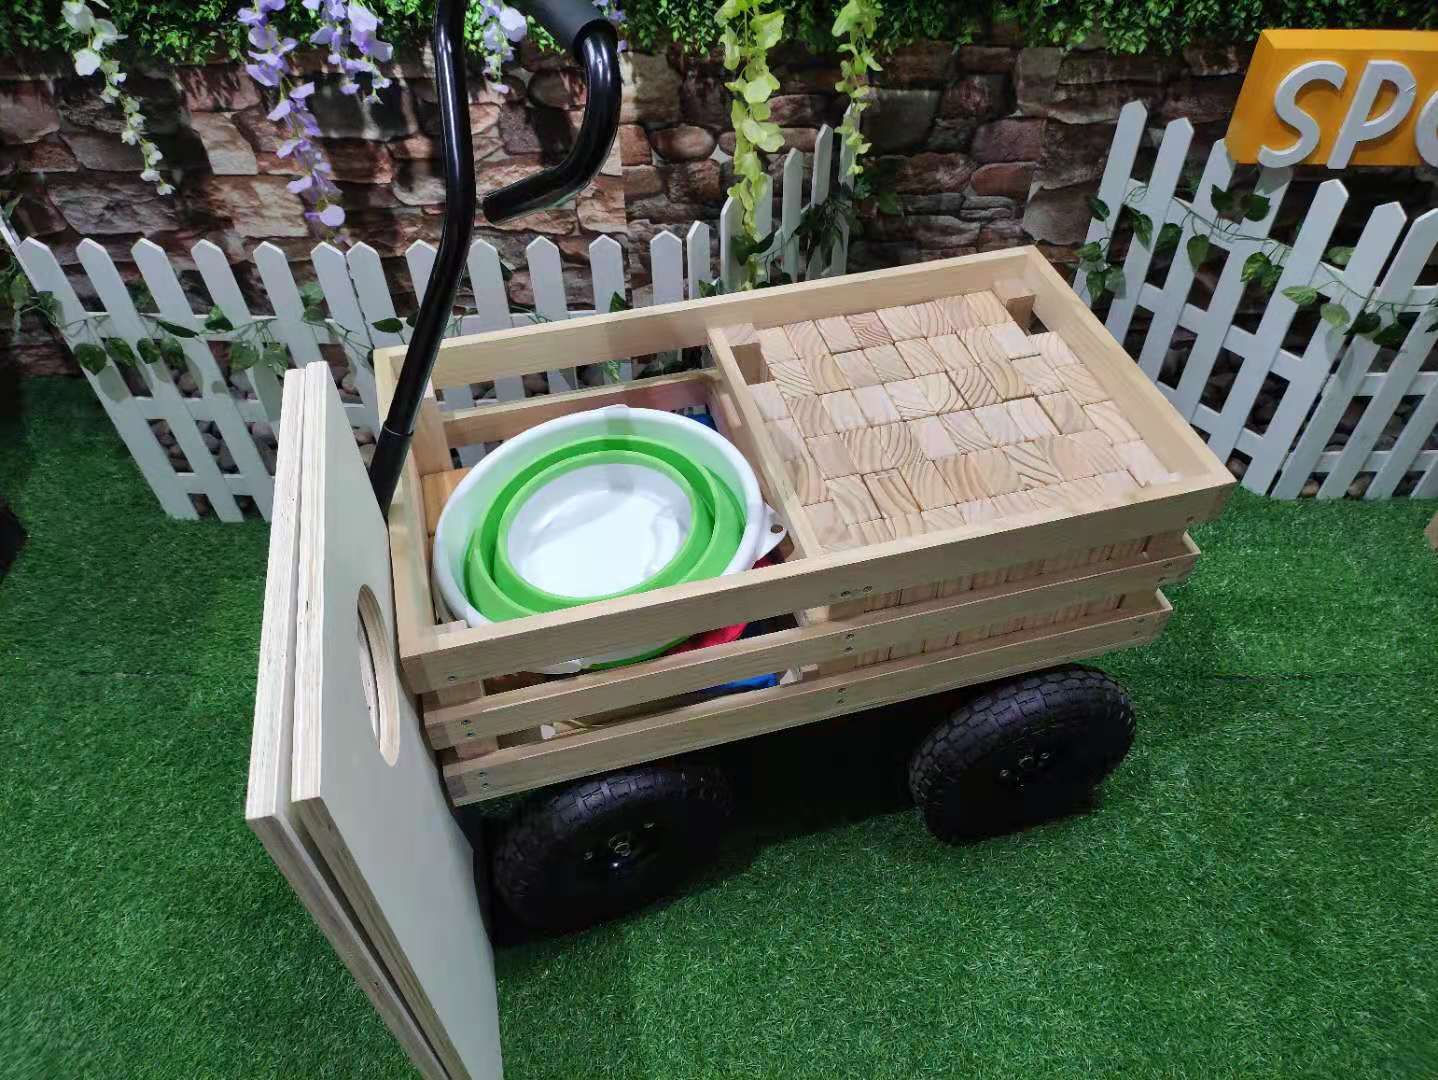 All-terrain Wagon That Transforms into Backyard Games Like Cornhole, Washers,Jenga Yard Dice And Pong! Yard Games On-The-Go Yard Game Center